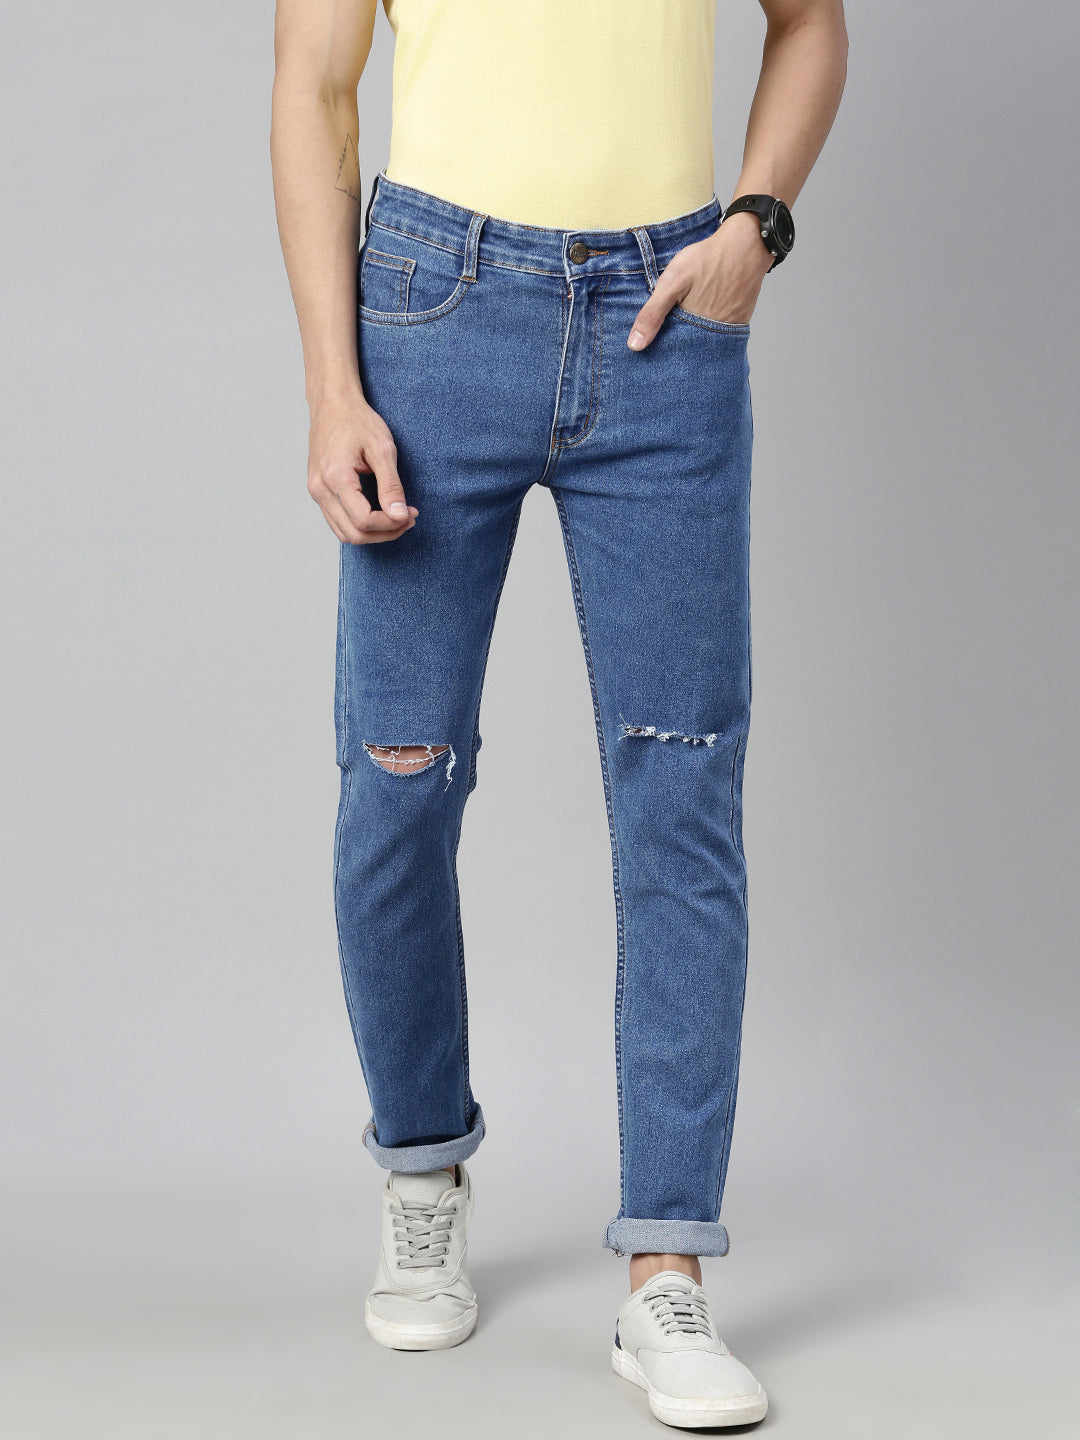 Urbano Fashion Men's Light Blue Slim Fit Knee Slit Distressed Jeans Stretchable